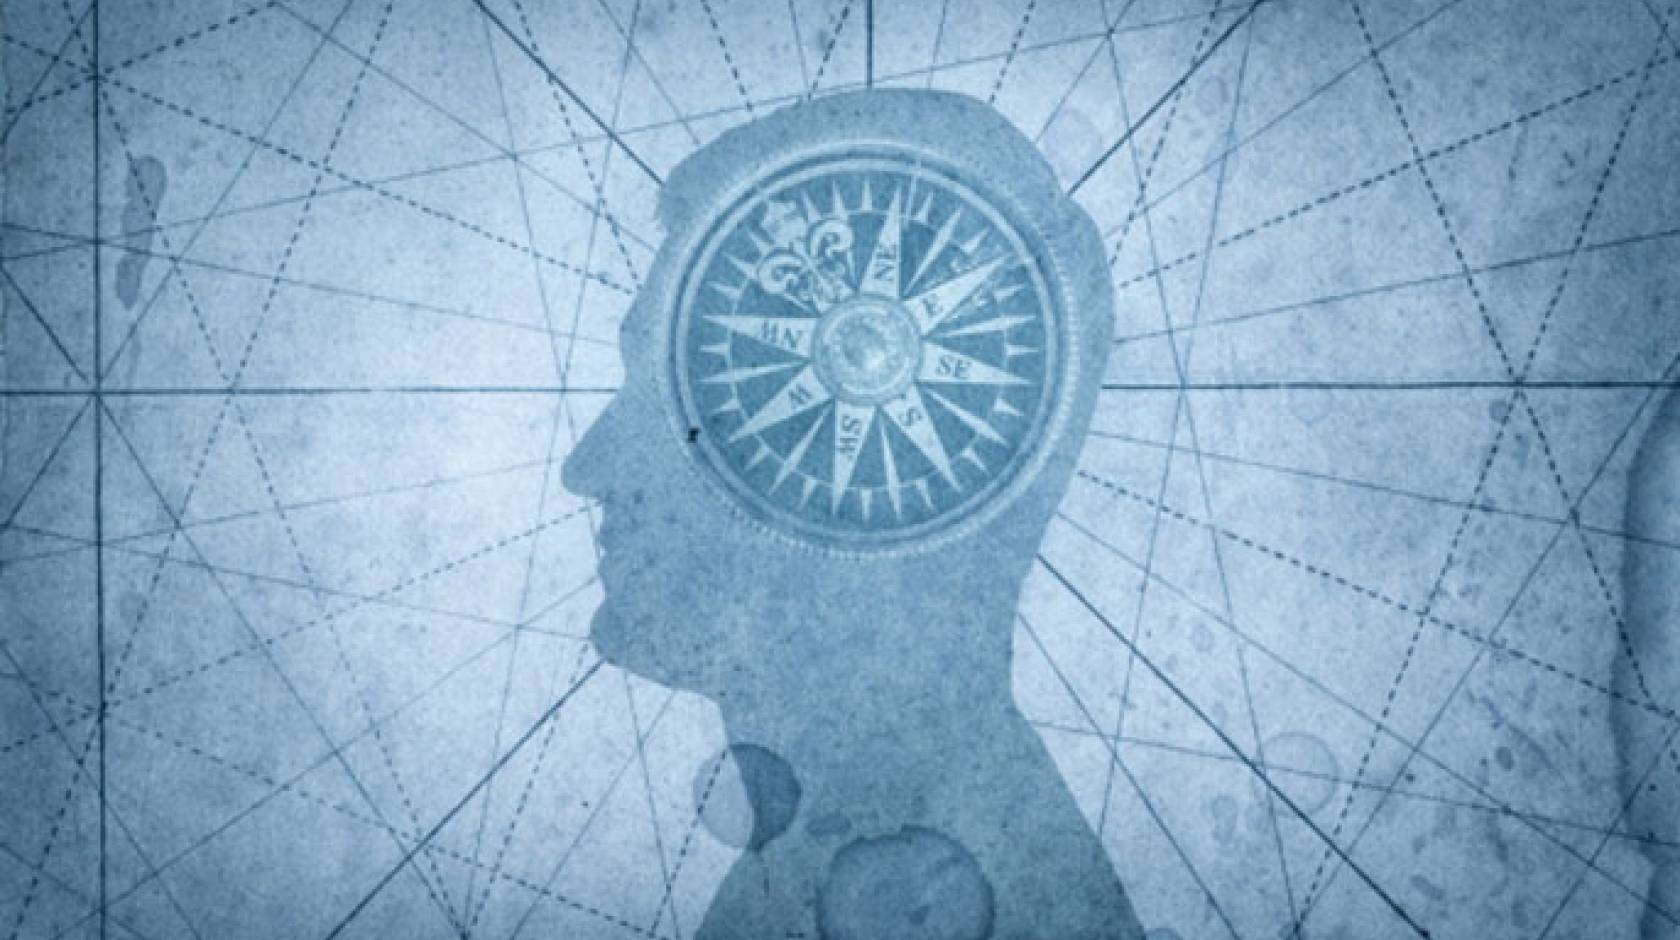 Compass inside someone's brain illustration